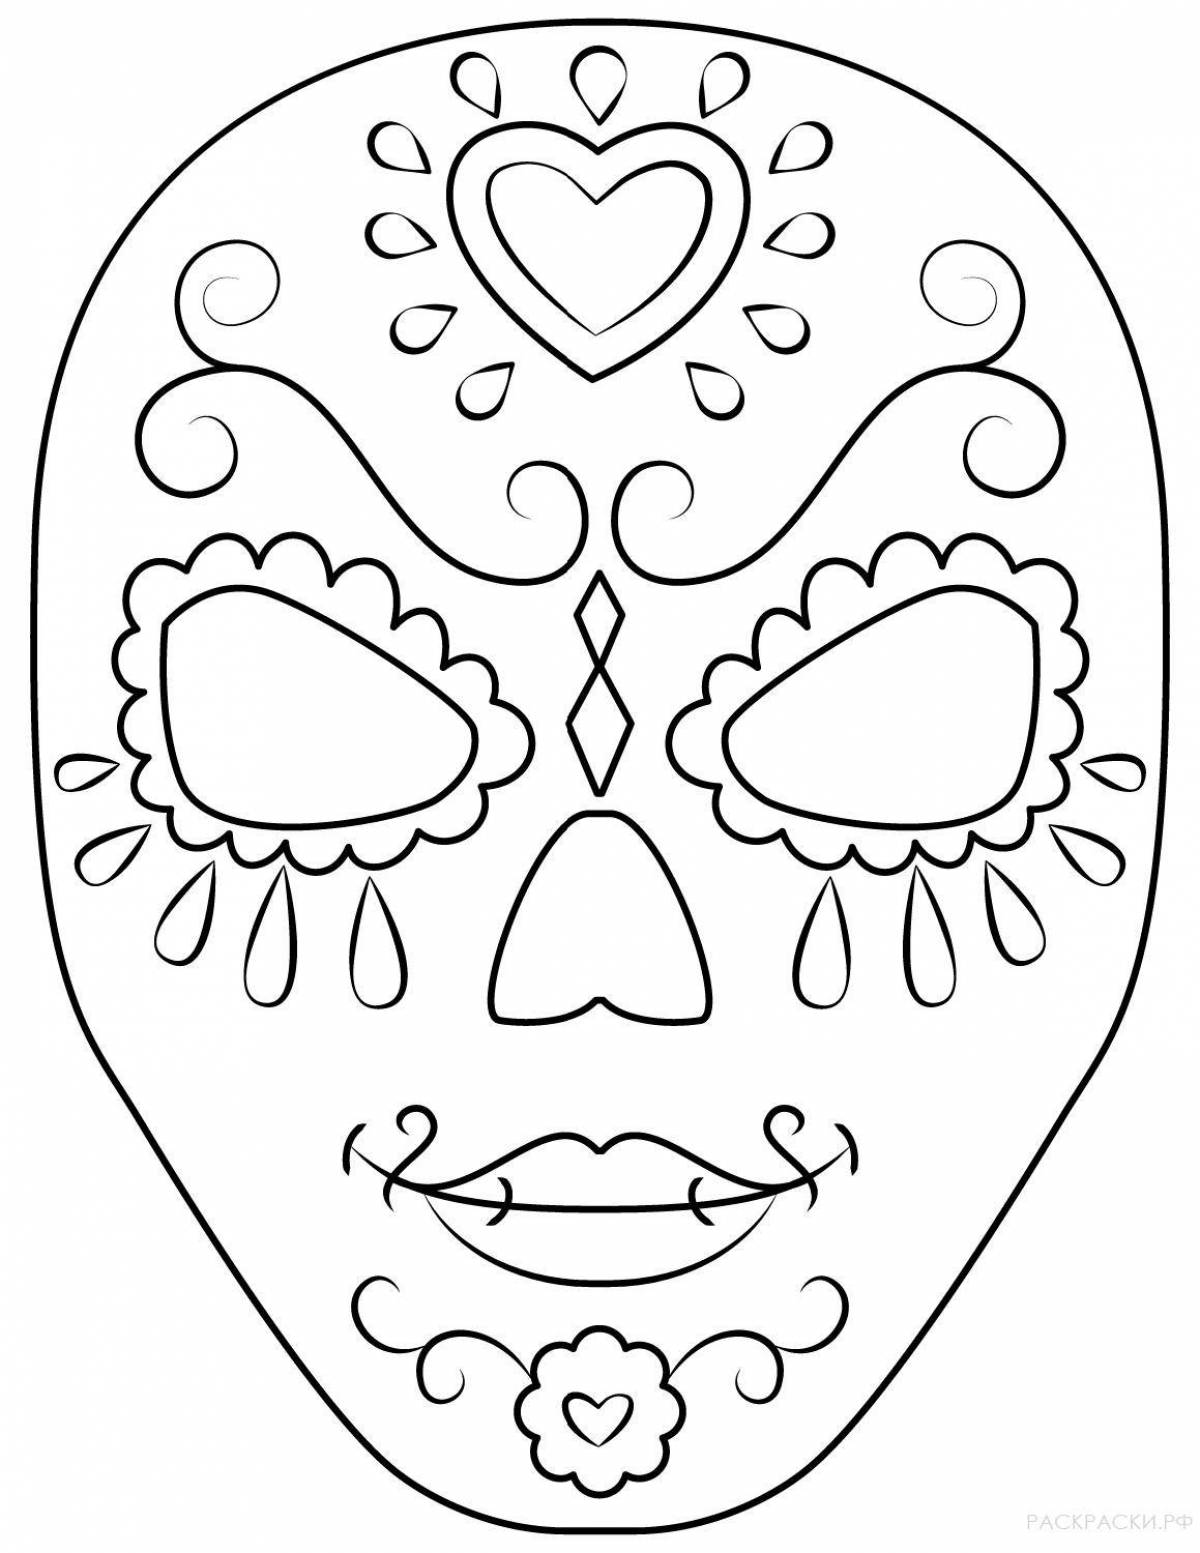 Animated moisturizing face masks coloring book